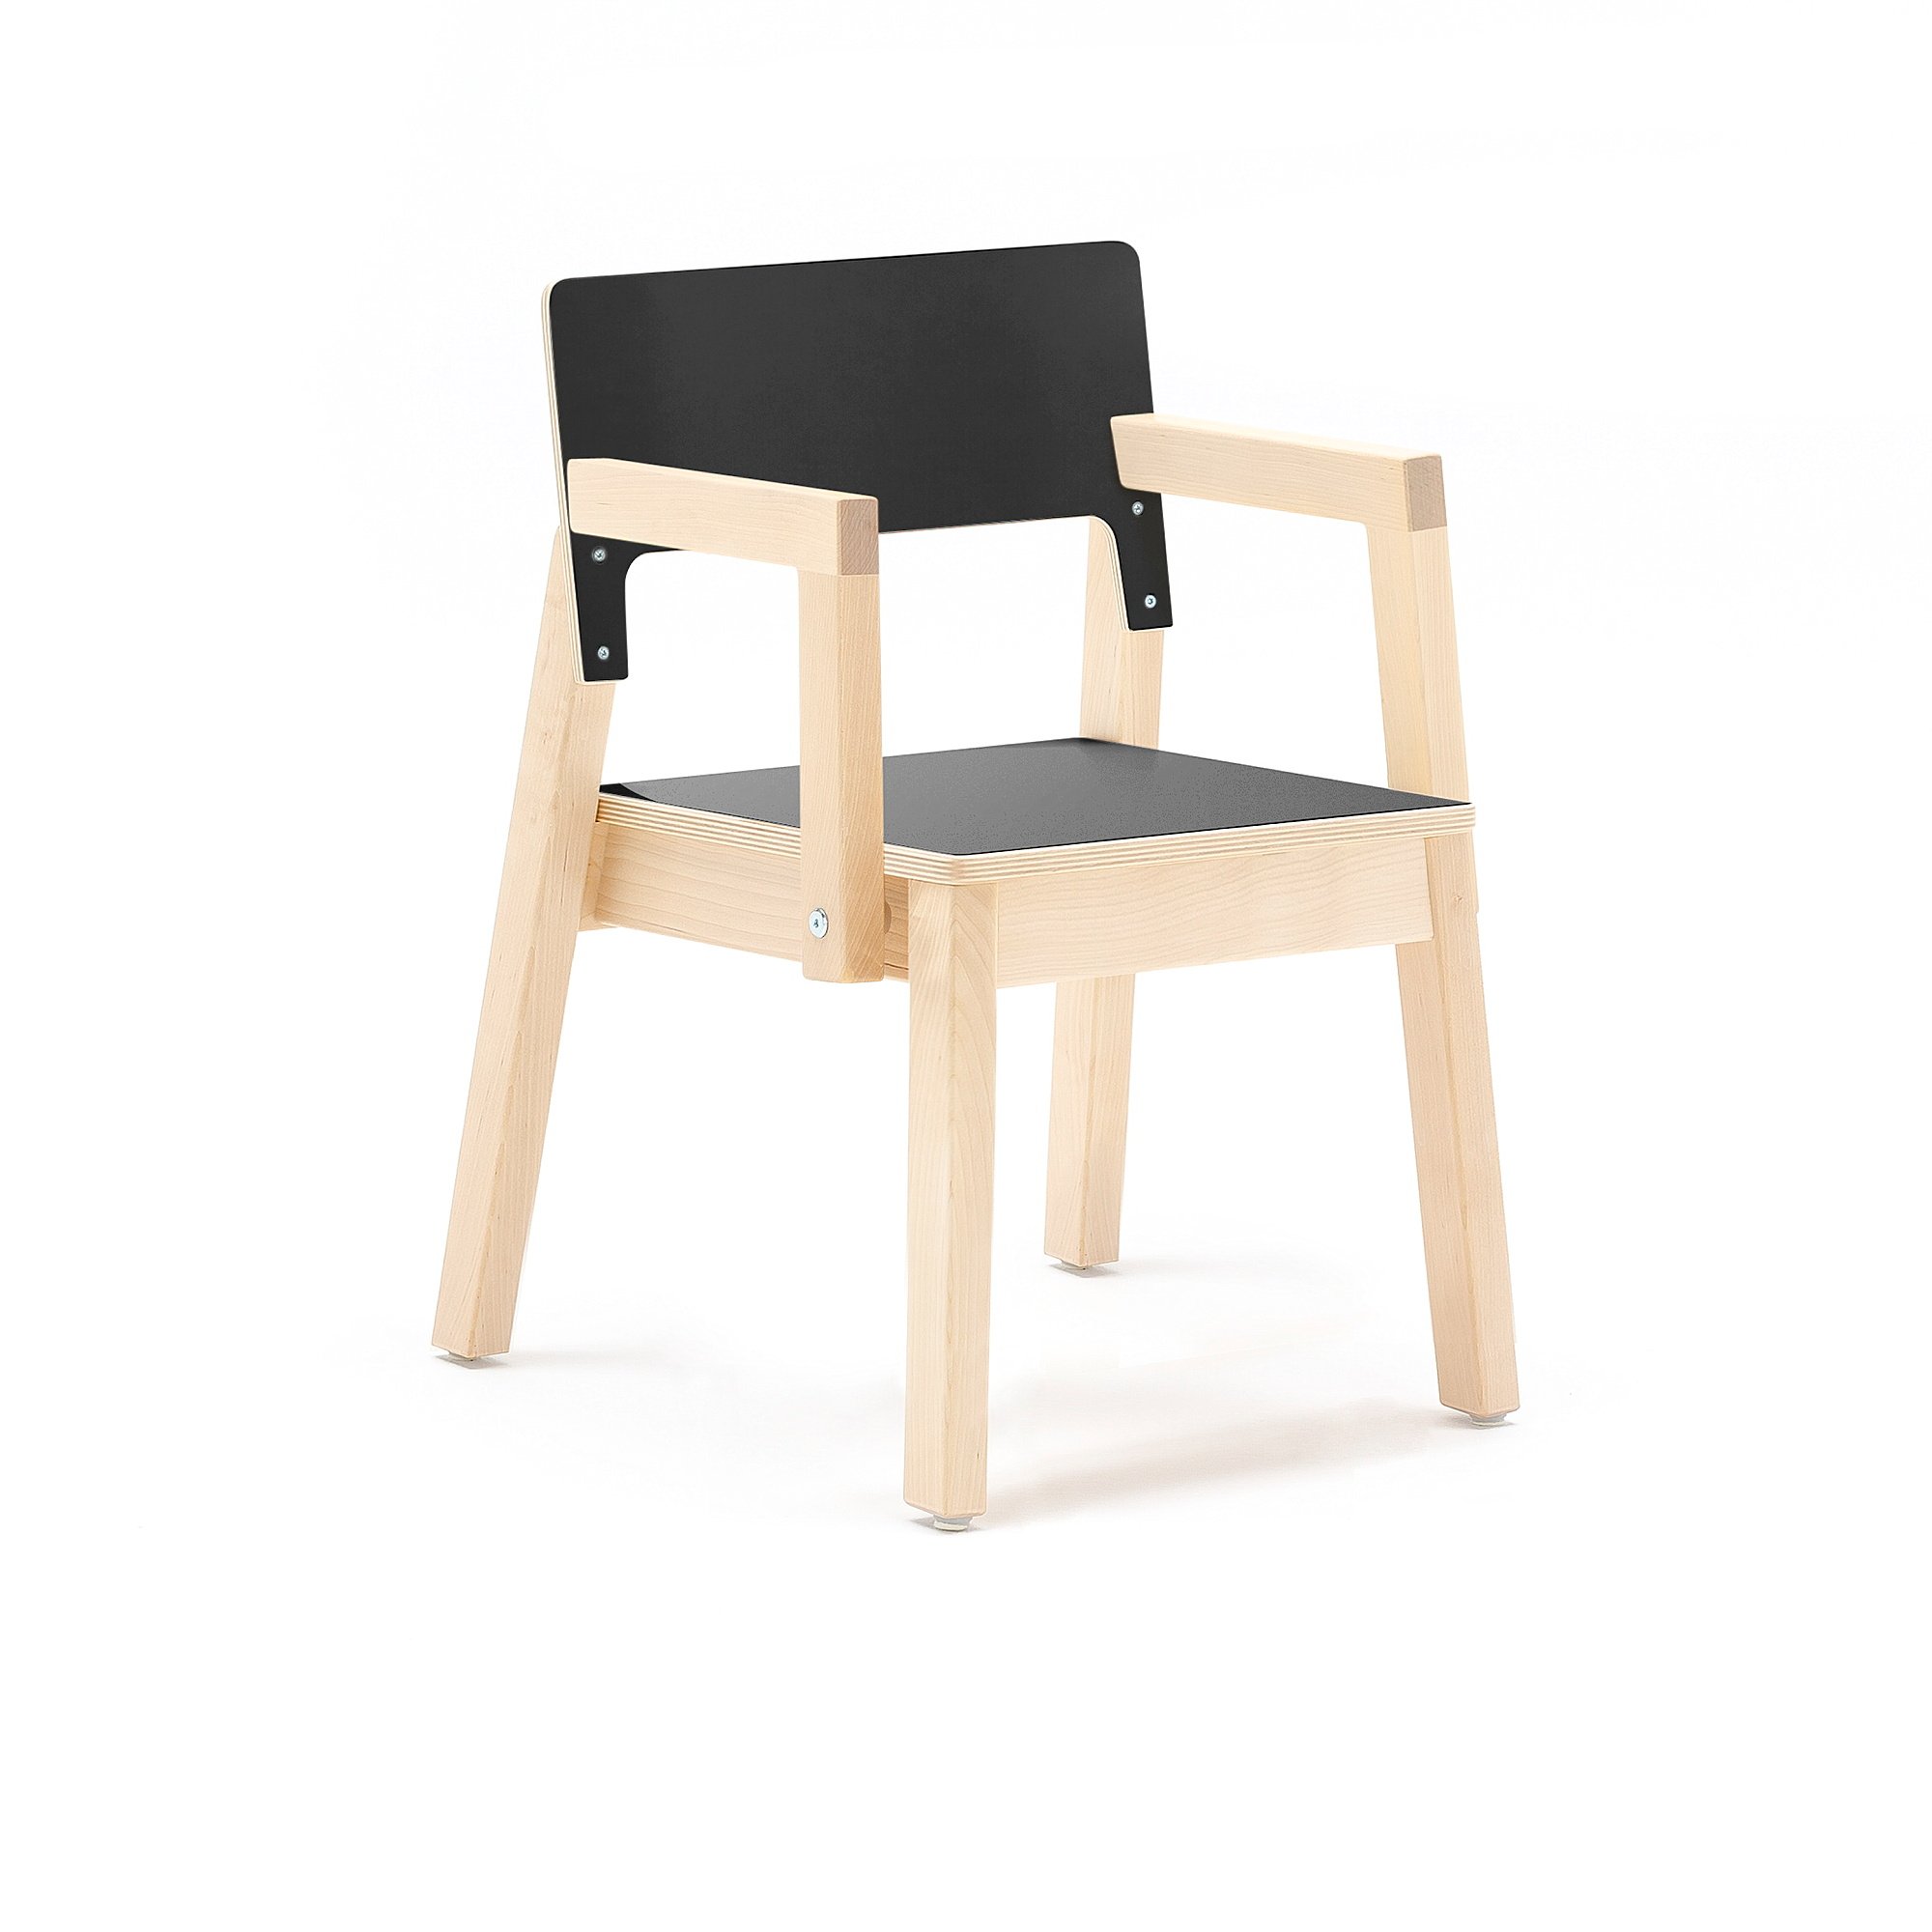 E-shop Detská stolička LOVE s opierkami rúk, V 350 mm, breza, laminát - čierna